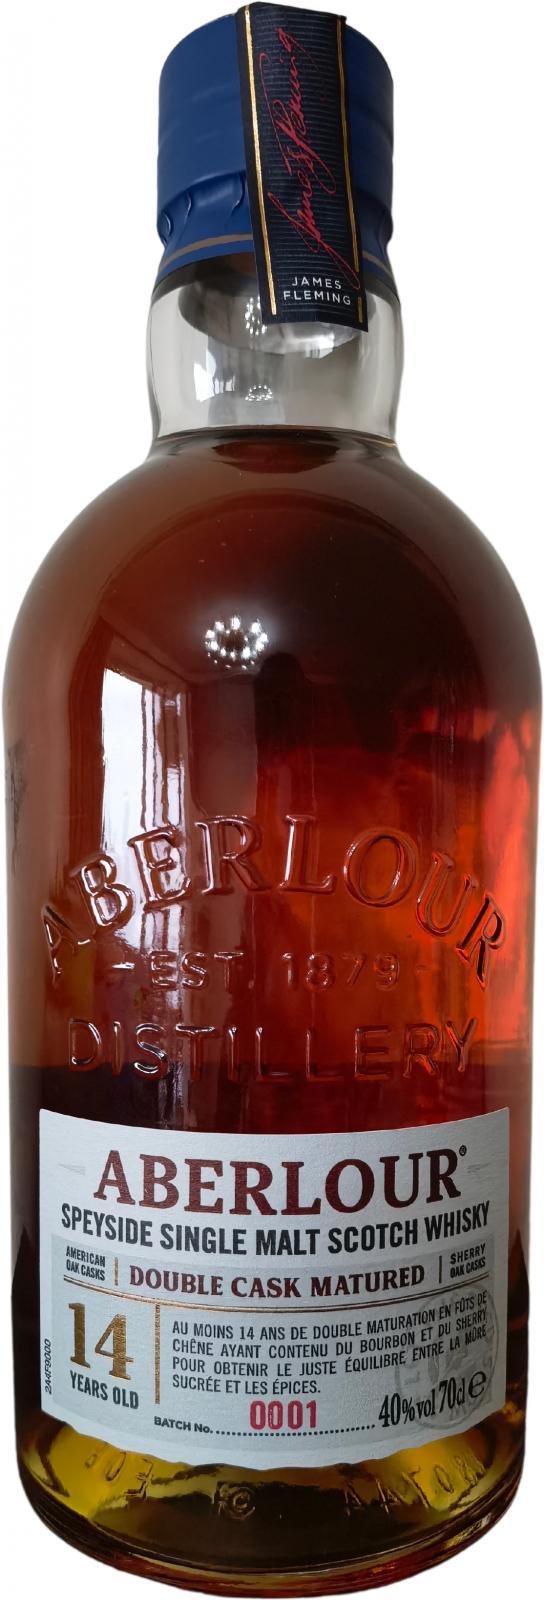 Acheter Aberlour 14 years 2000 Cadenhead's One of 672 - bottled